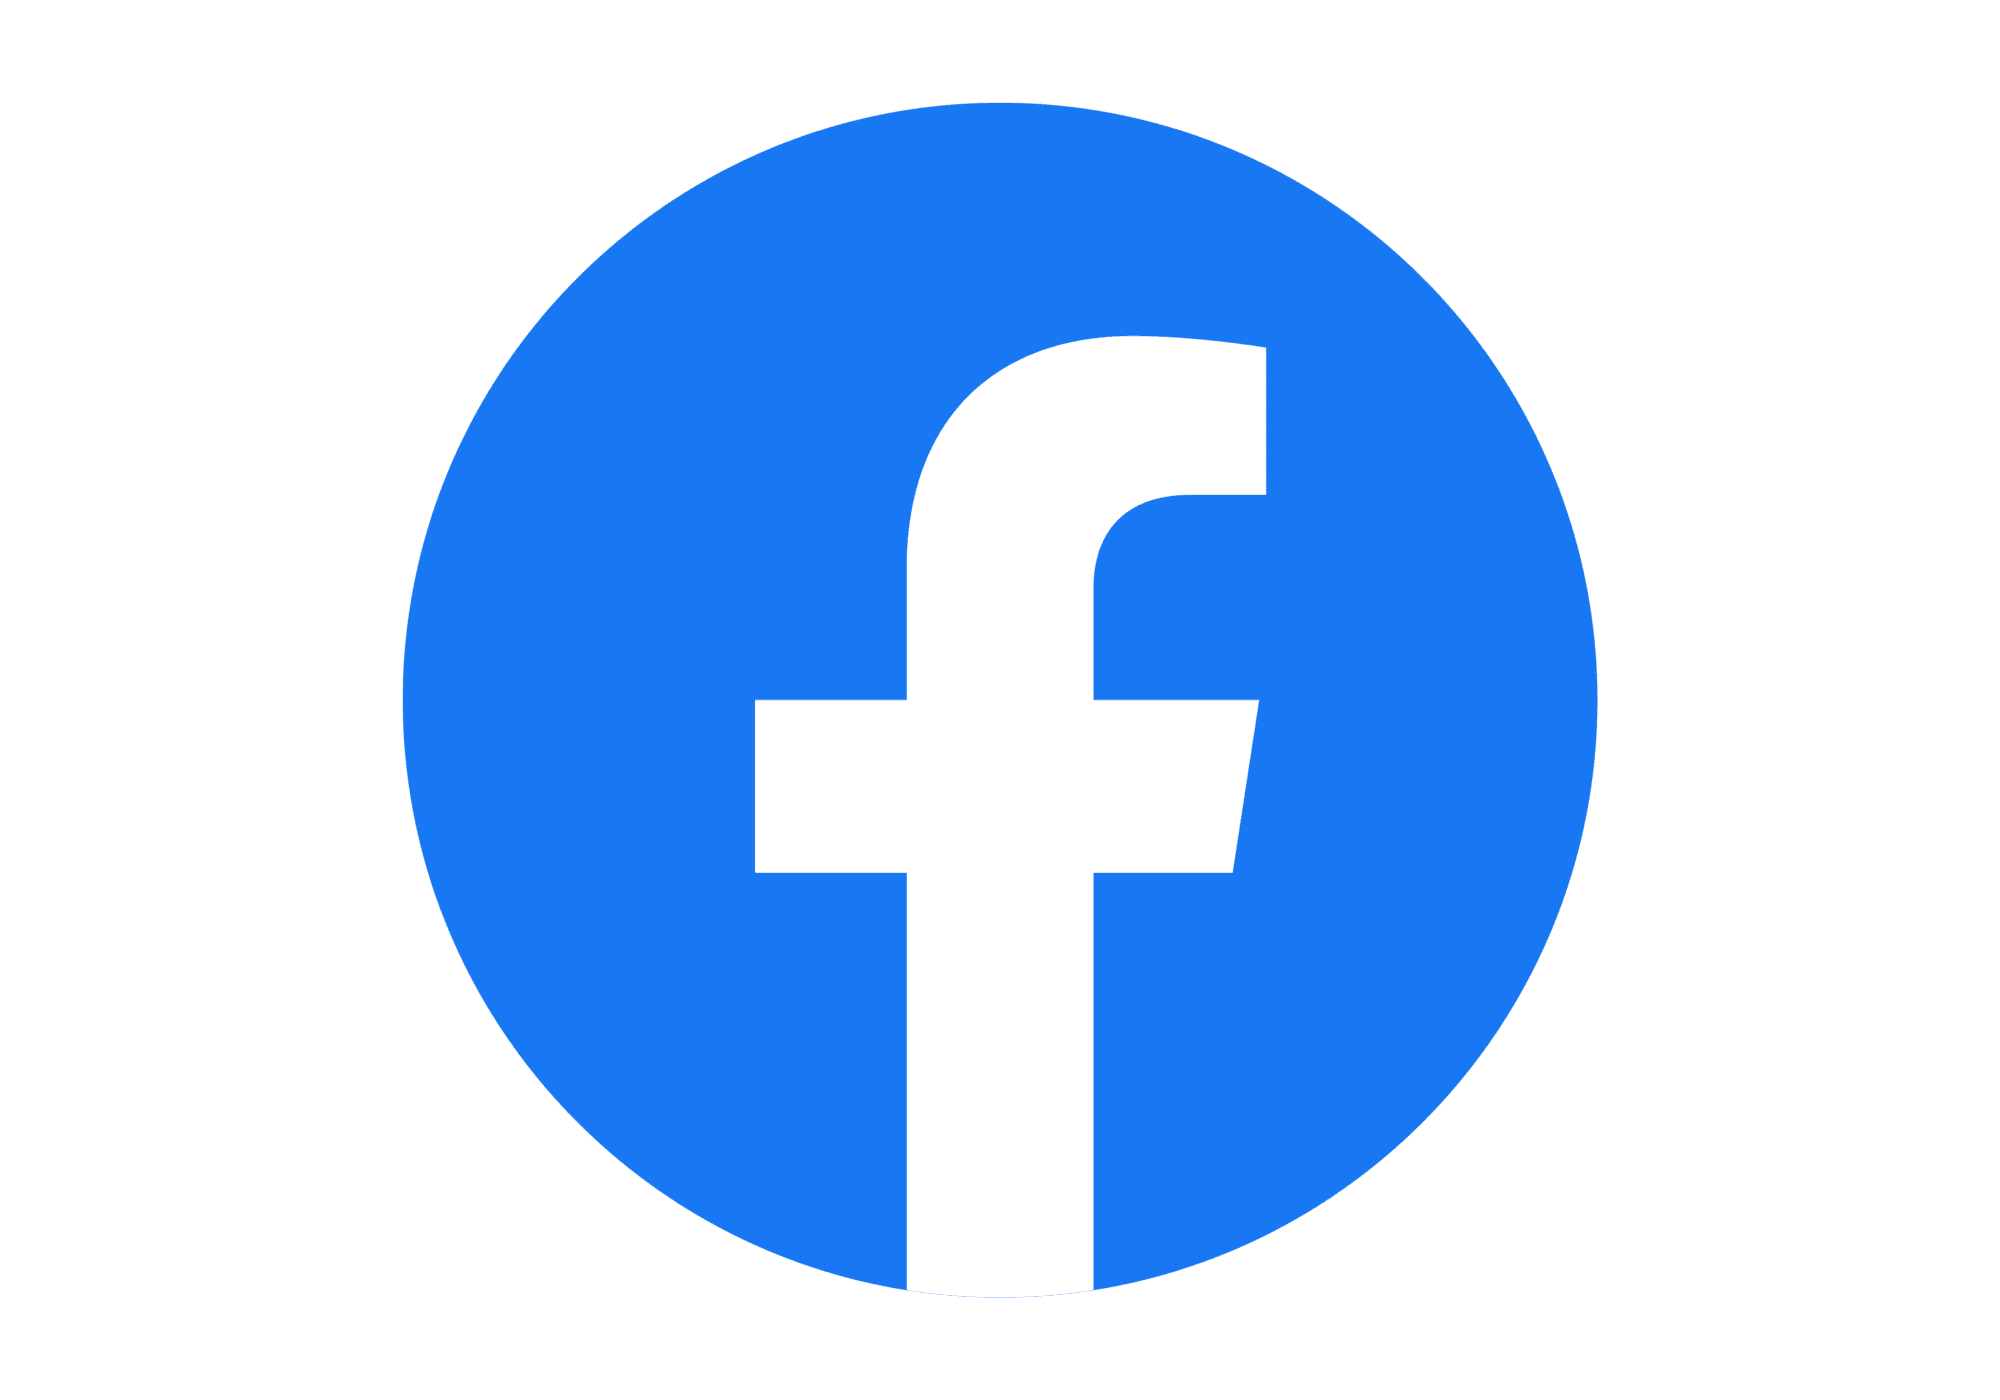 LeftMenuFooter/Facebook_logo_PNG12.png